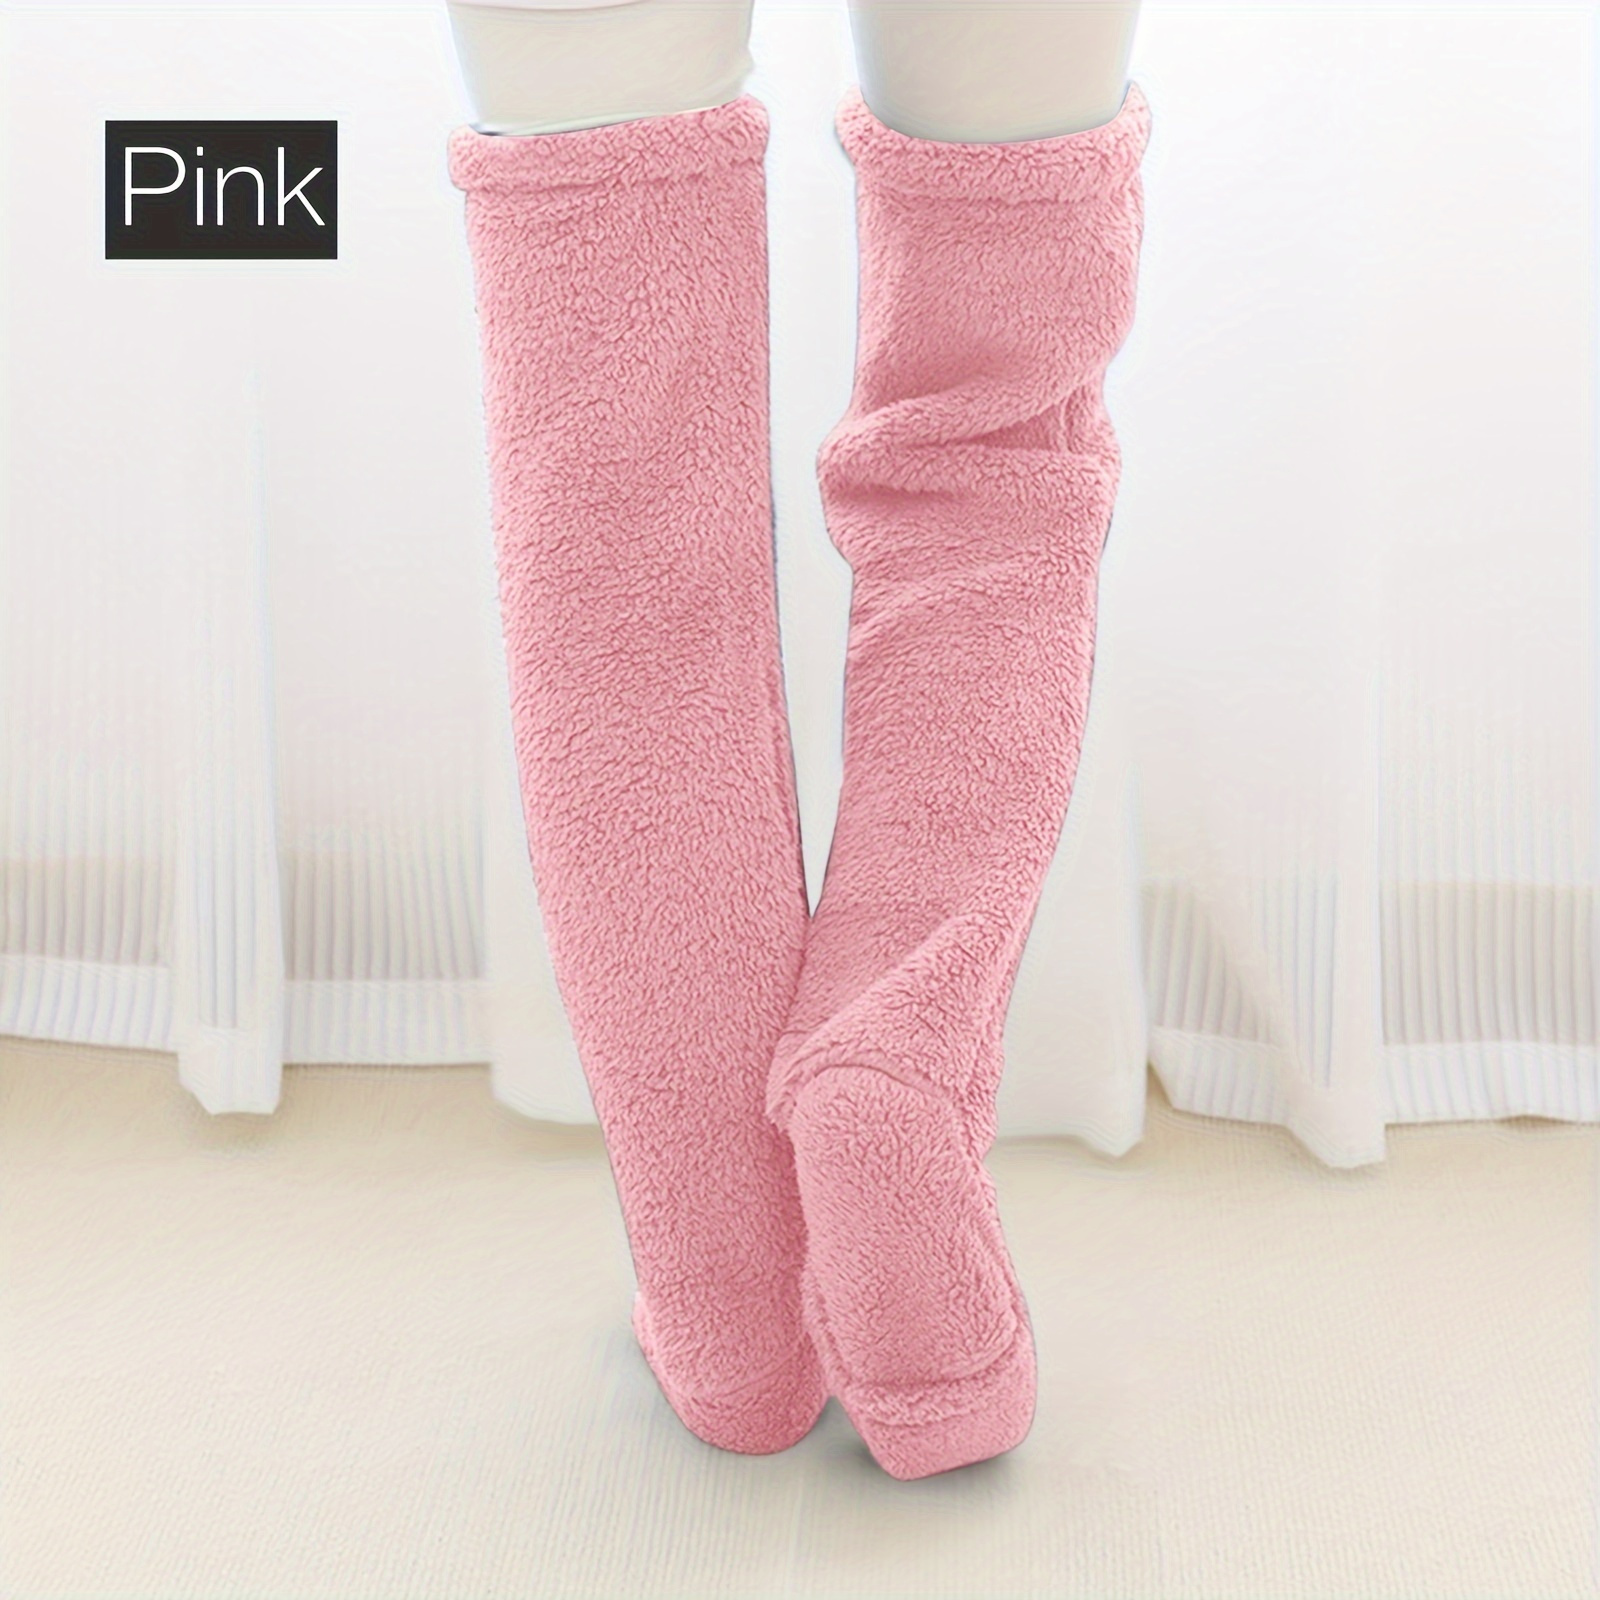 

Thickened Fuzzy Thigh High Socks, Warm Over The Knee Socks, Women's Stockings & Hosiery